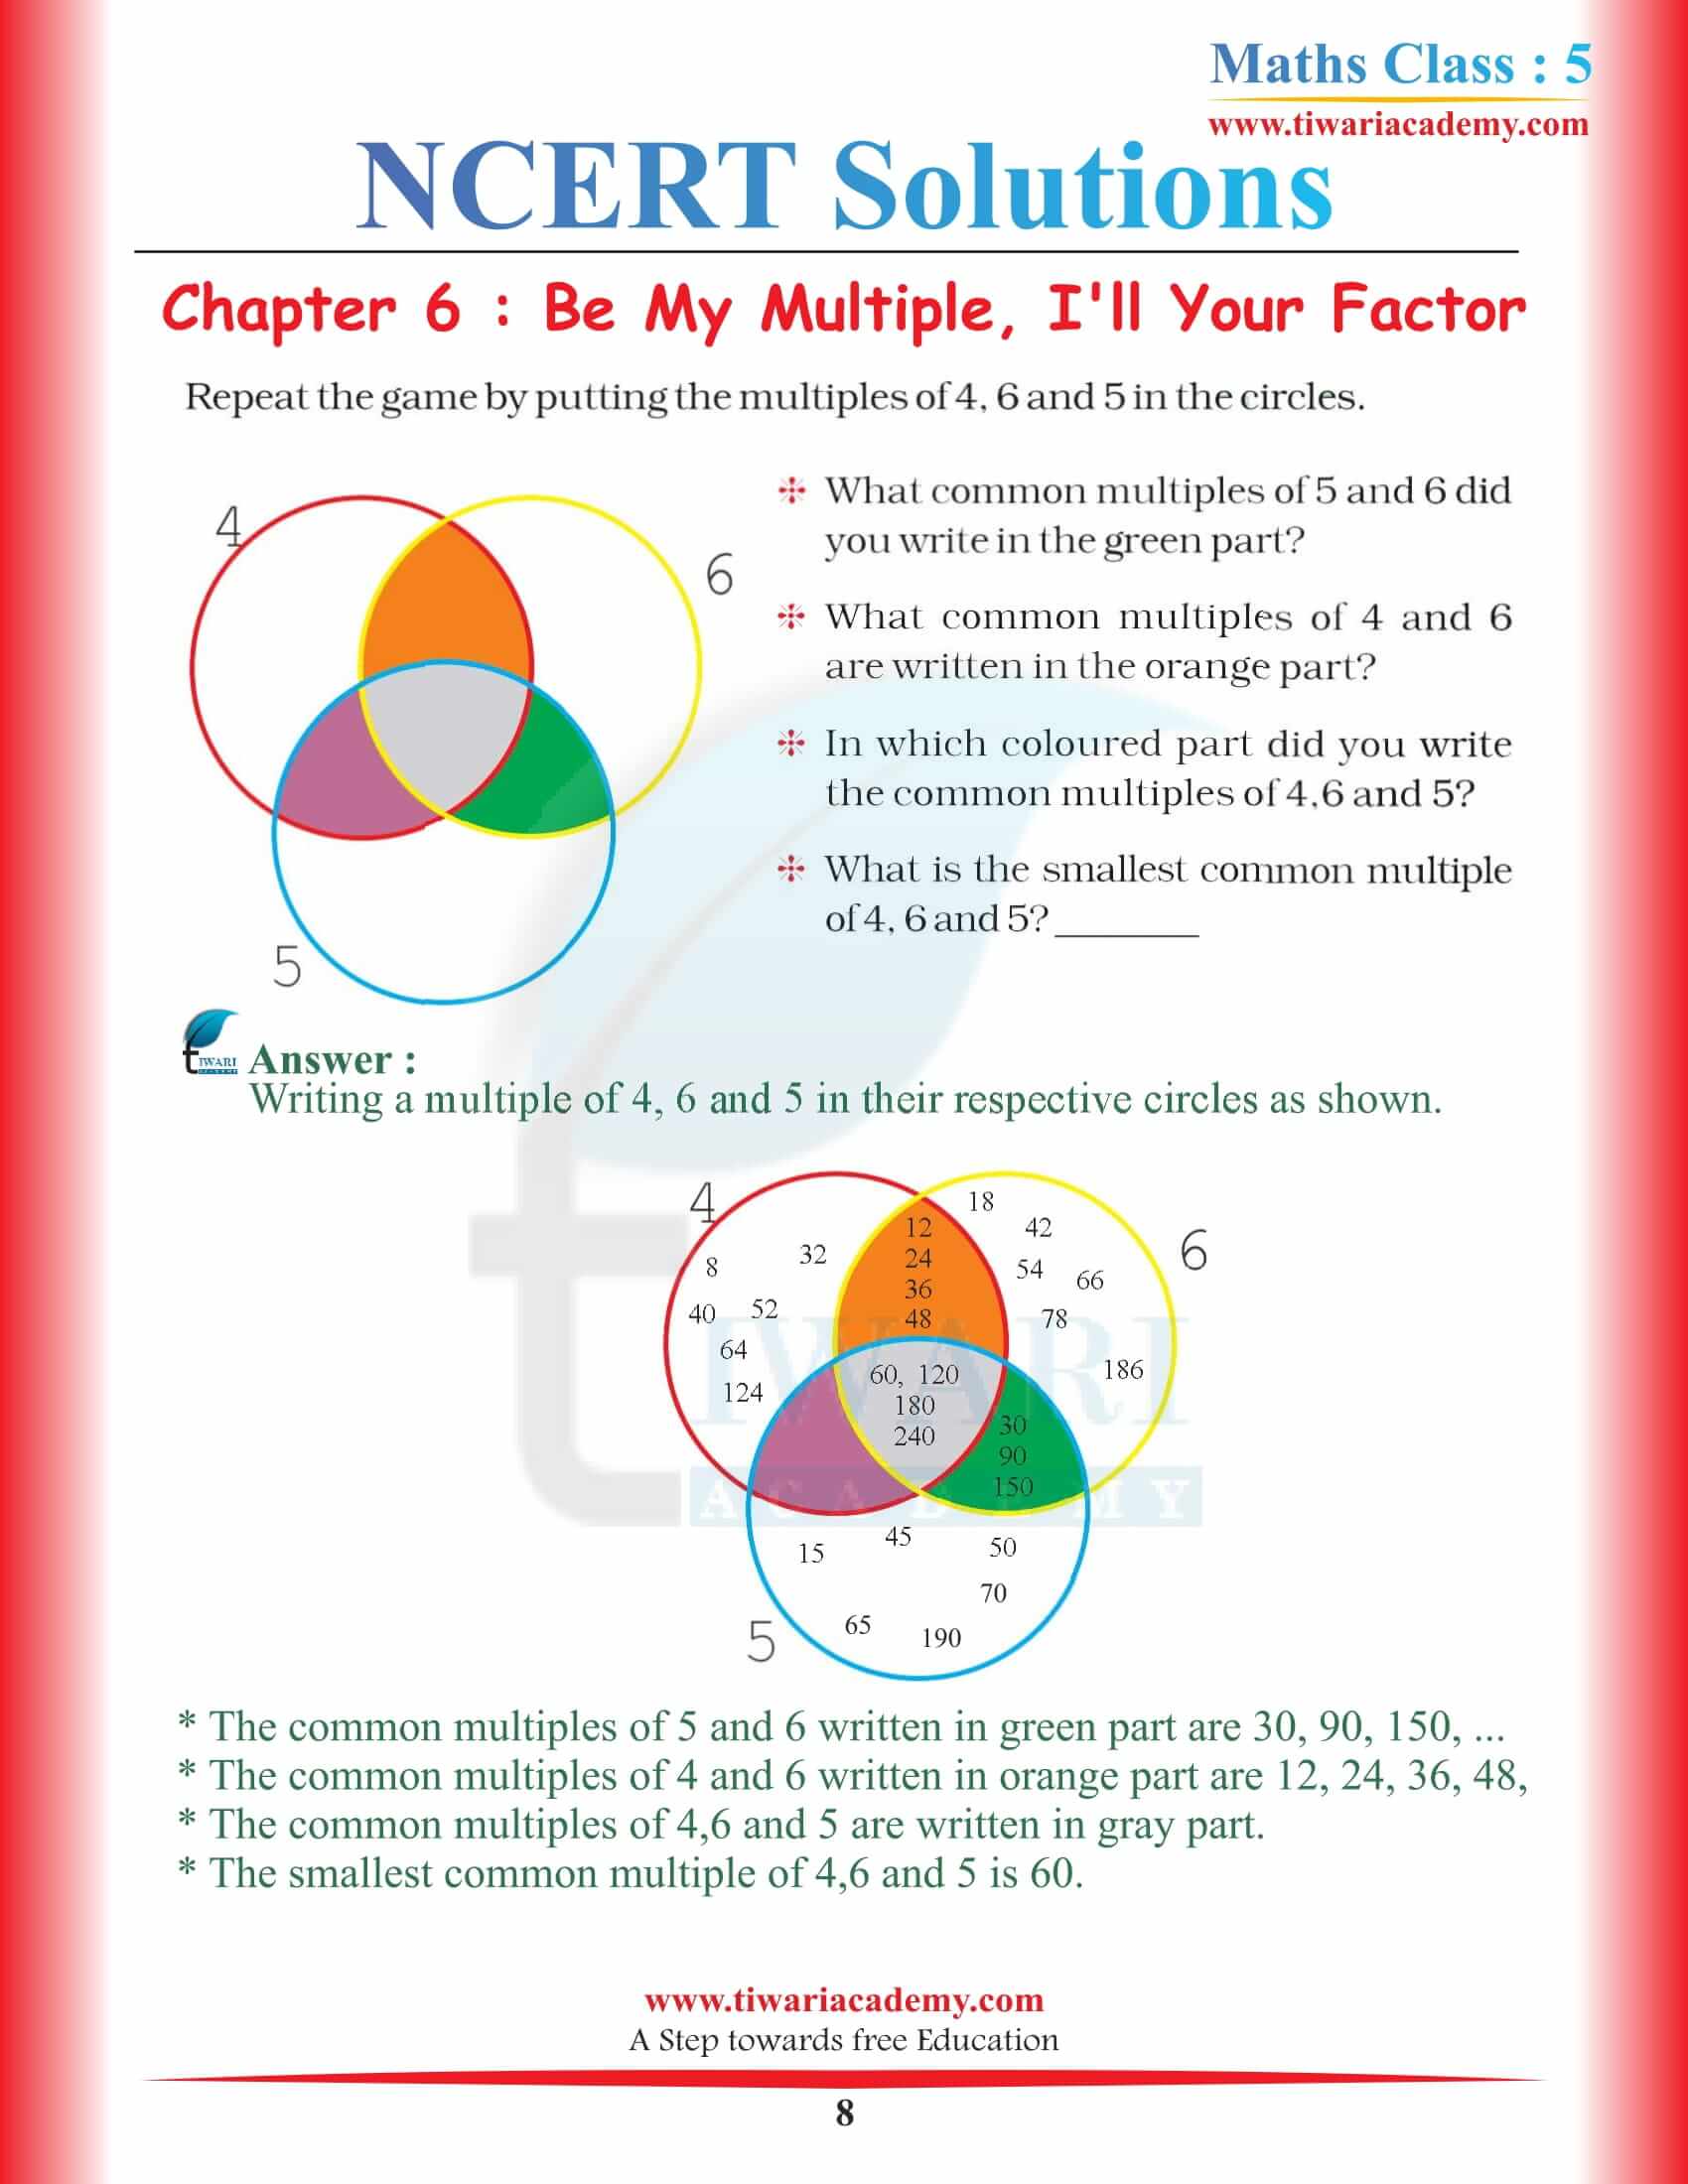 NCERT Solutions for Class 5 Maths Chapter 6 updated